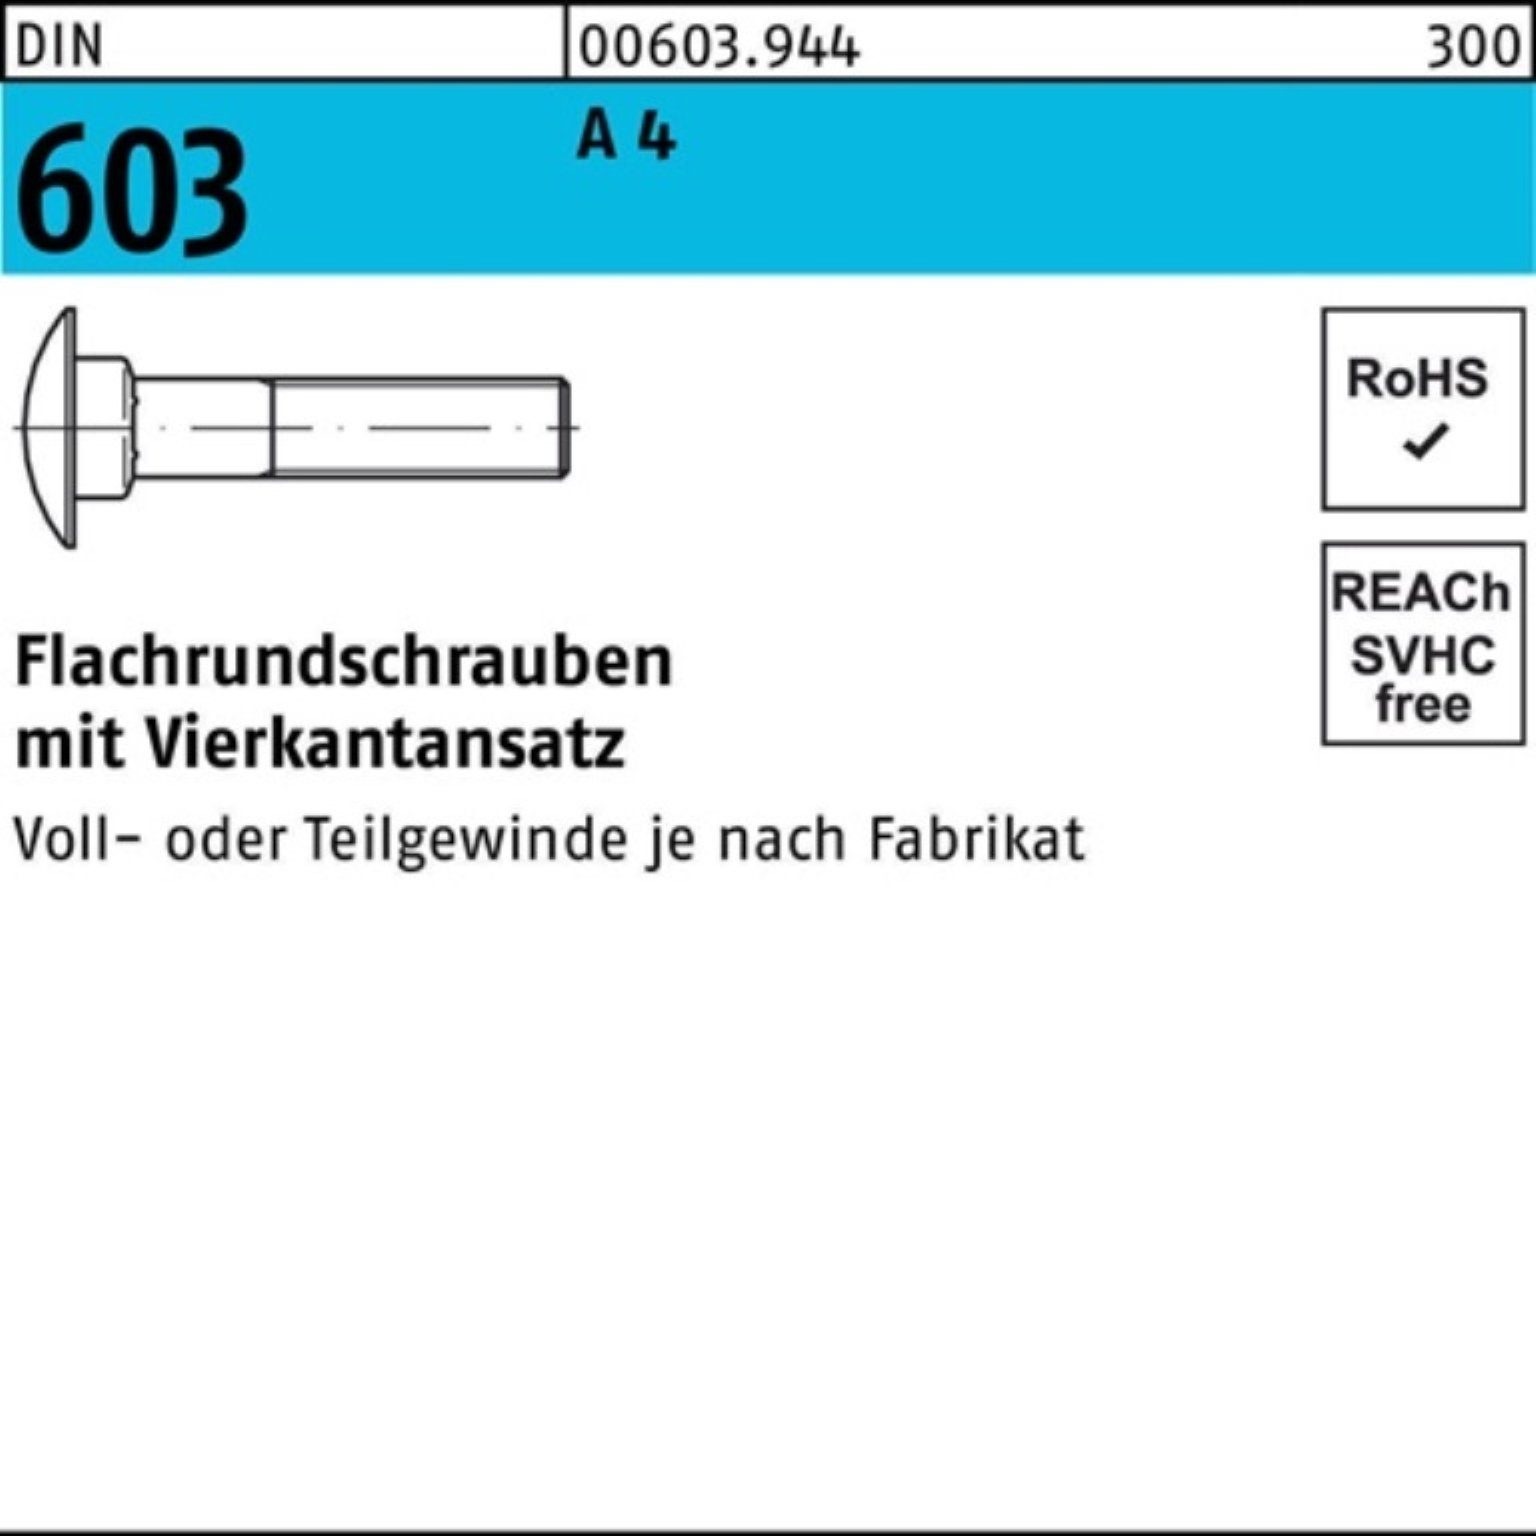 Reyher Schraube 100er Pack Flachrundschraube DIN 603 Vierkantansatz M8x 130 A 4 10 St